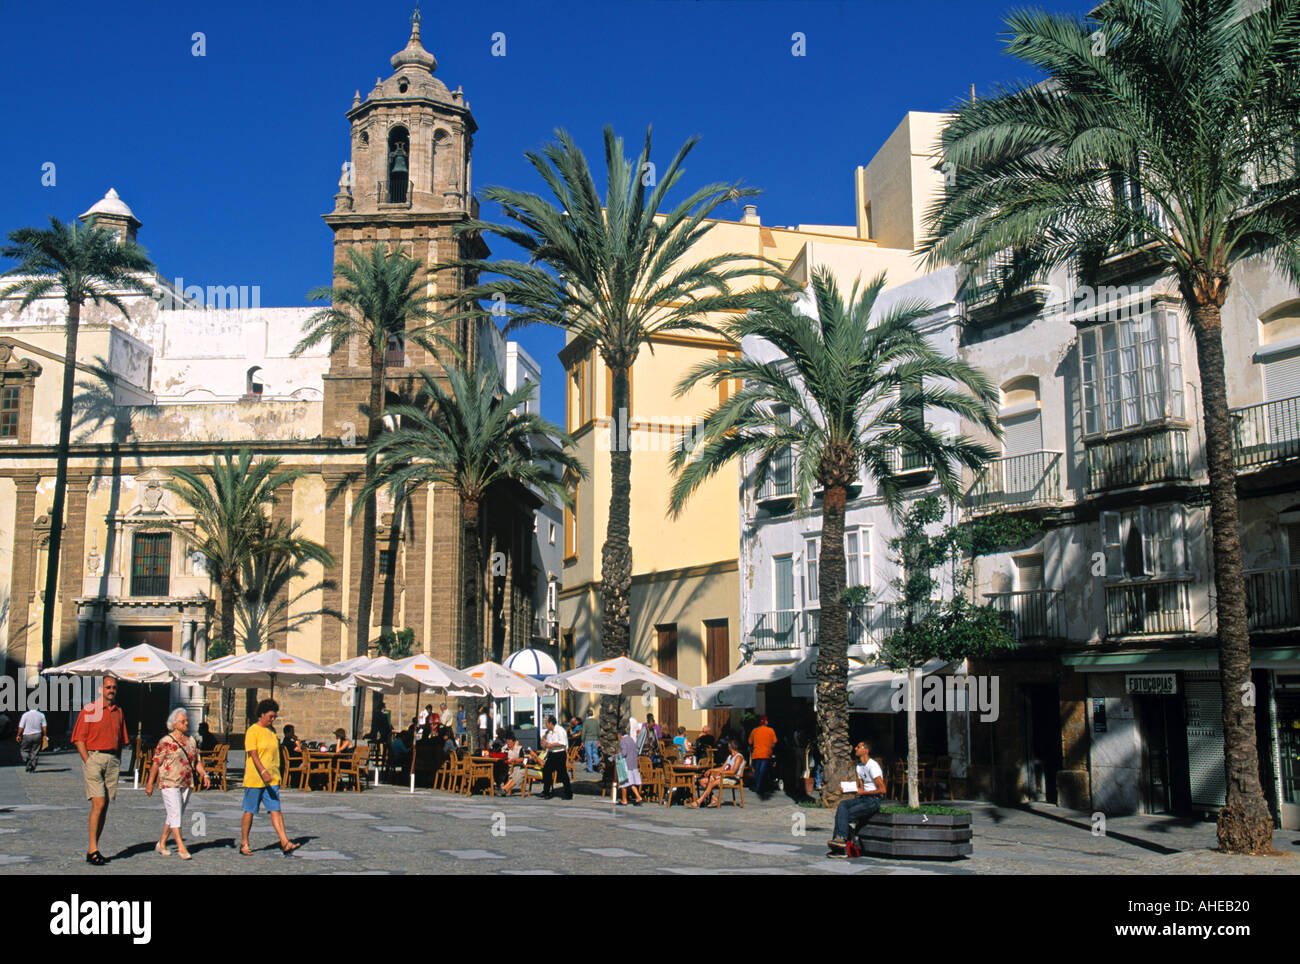 Old Cathedral, Plaza De La Catedral, Cadiz, Spain Stock Photo